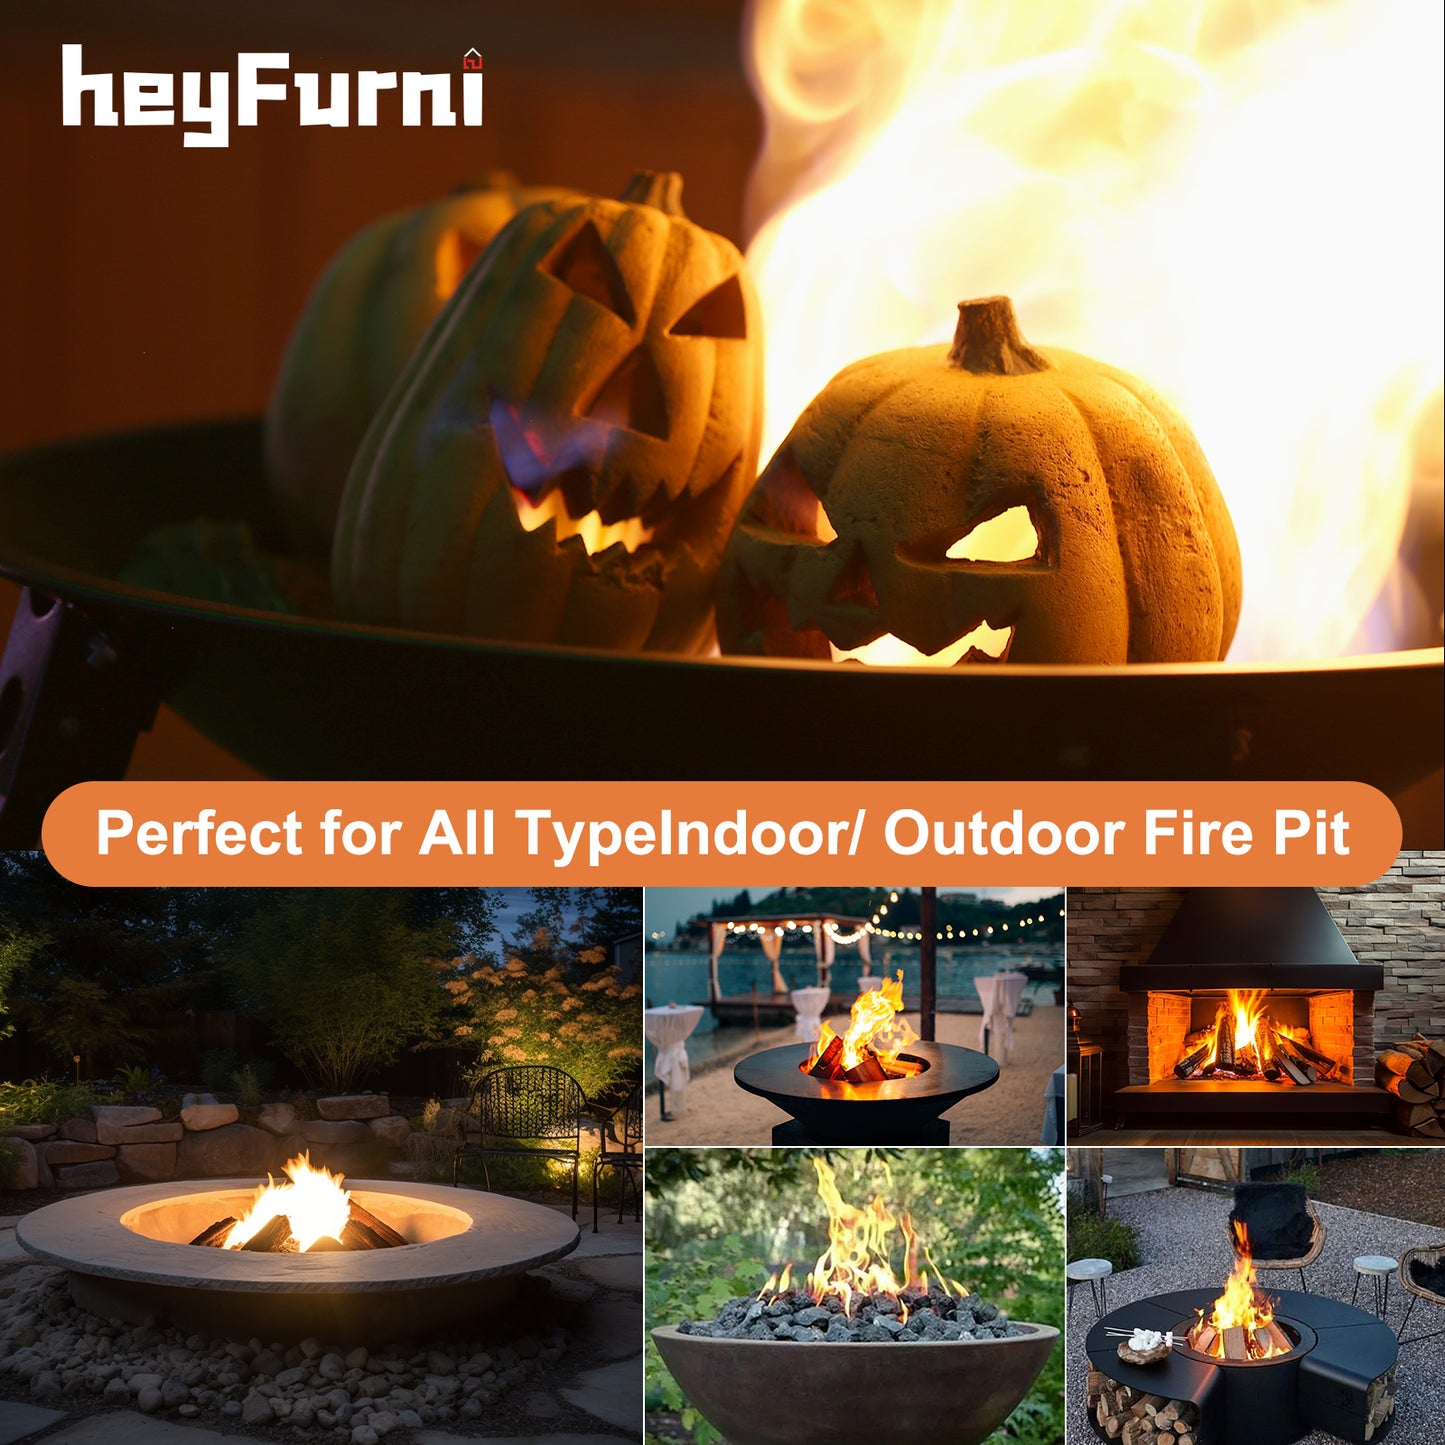 Ceramic Carved Pumpkin Gas Log / Fireproof Fire Pit Pumpkin / Two Size Fire Logs